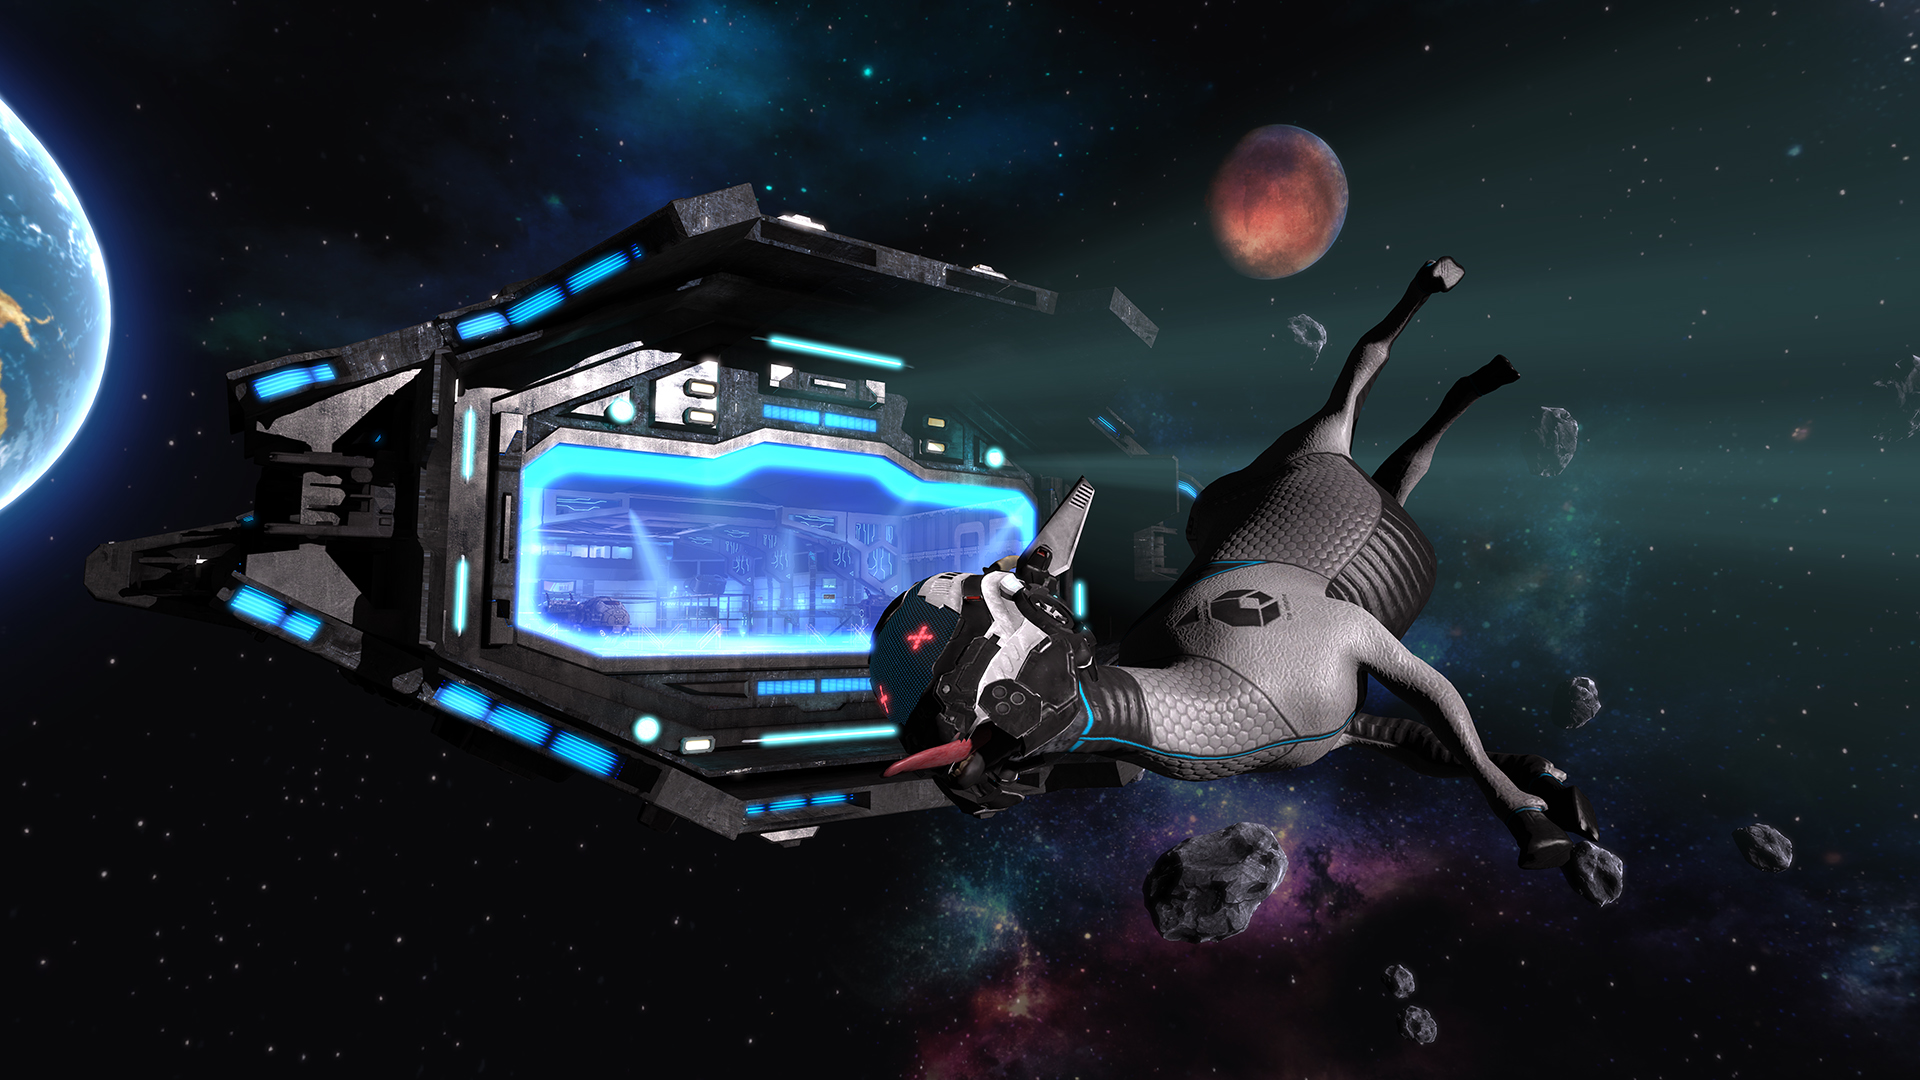 Goat Simulator: Waste of Space screenshot